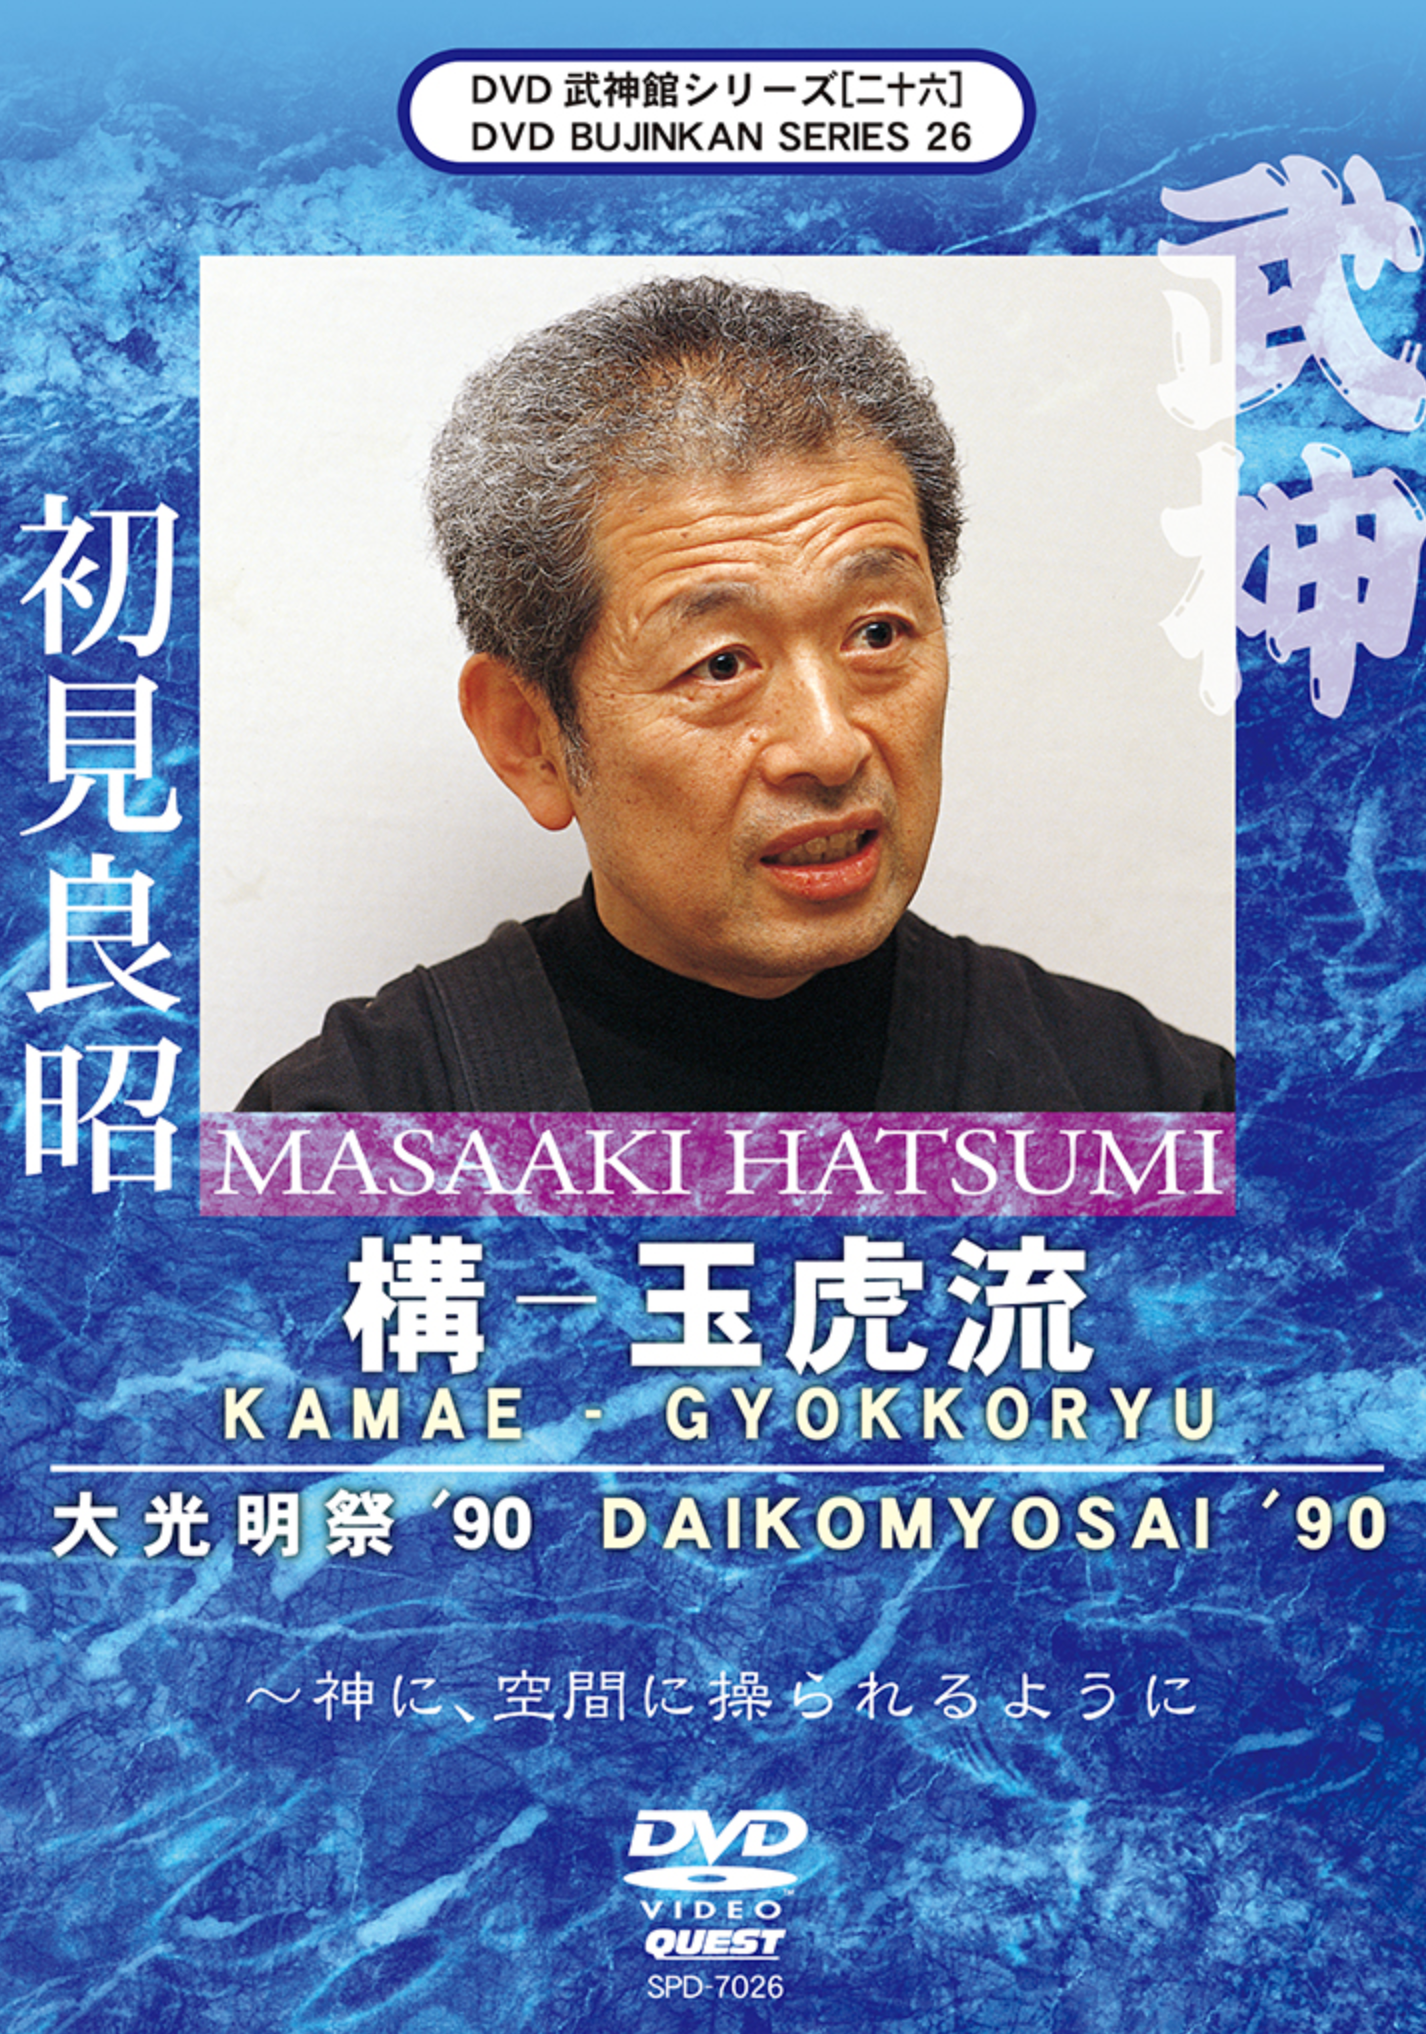 Bujinkan DVD Series 26: Kamae Gyokko Ryu with Masaaki Hatsumi - Budovideos Inc